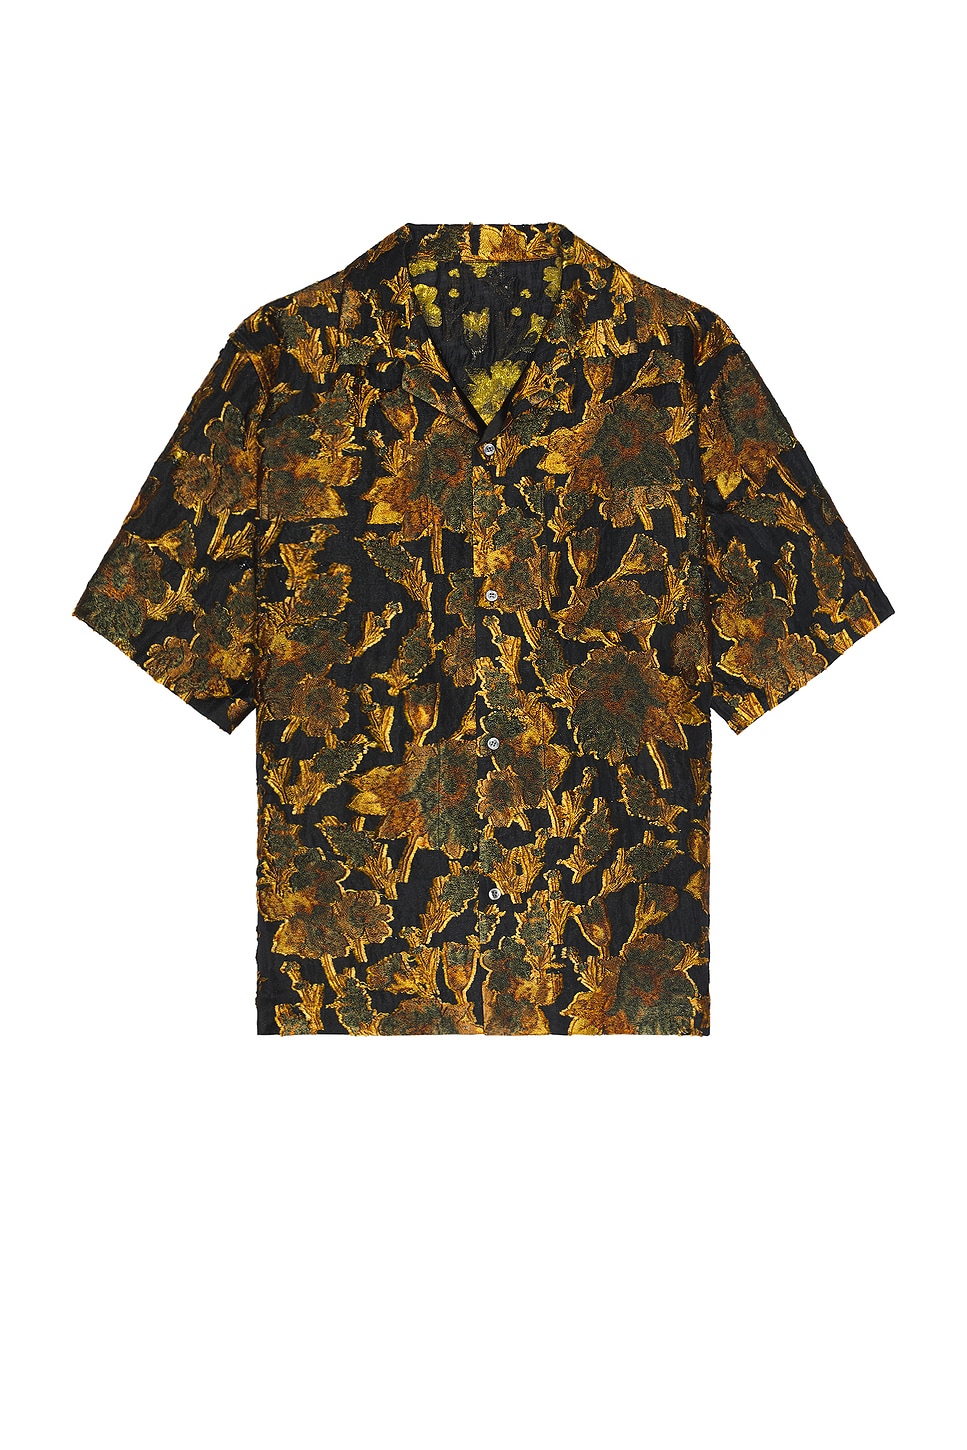 Image 1 of 4SDESIGNS Reversible Camp Shirt in Yellow & Black